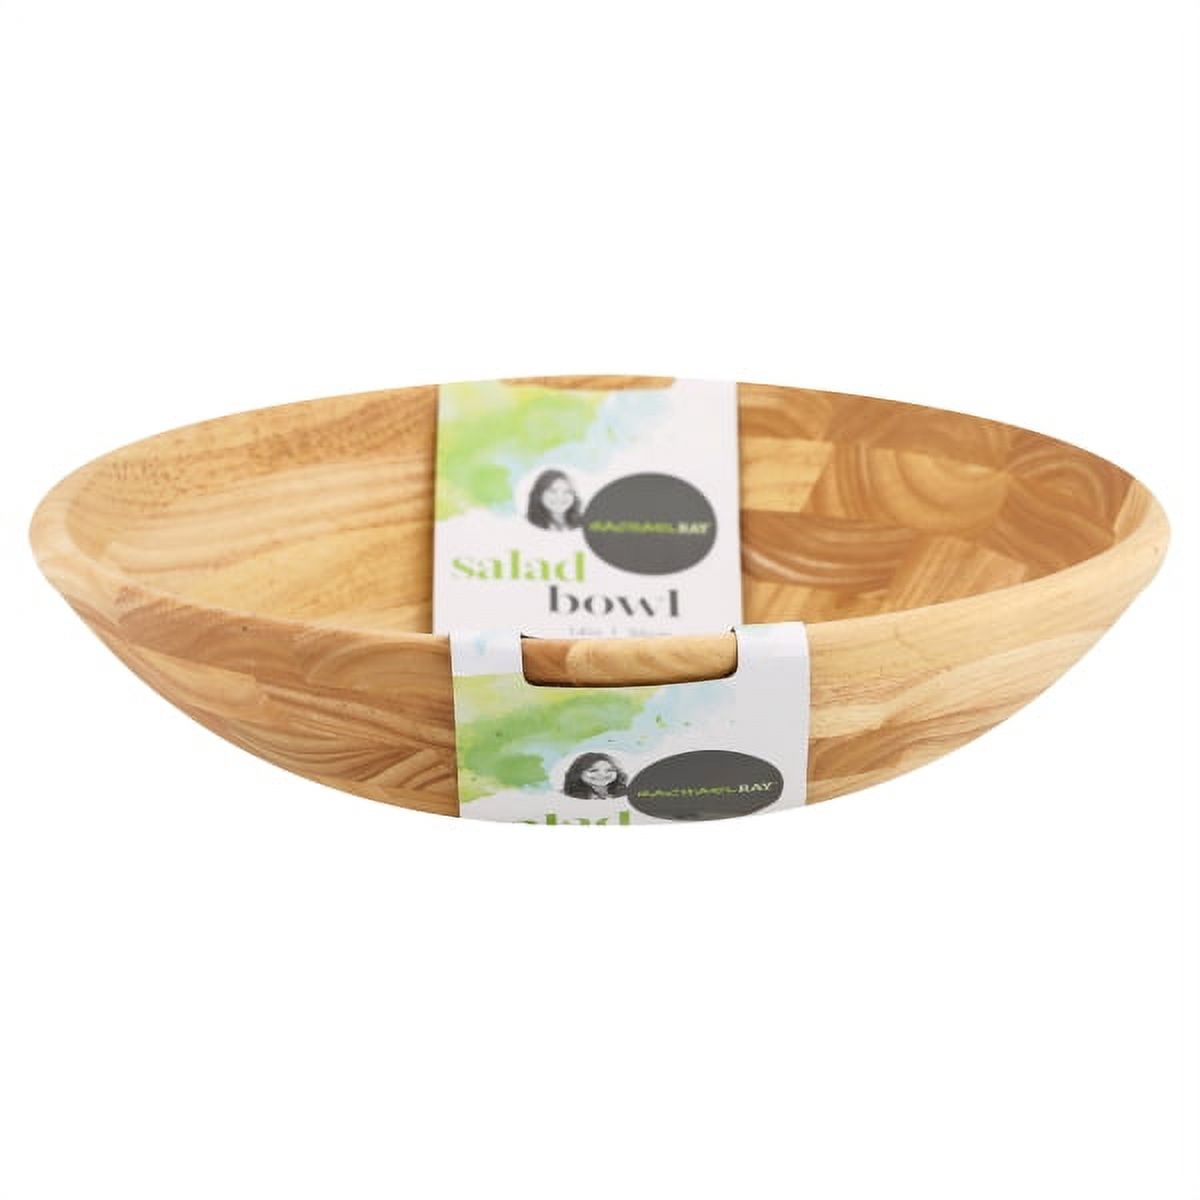 Rachael Ray Pantryware Parawood Salad Bowl, 14-Inch, Wood - image 1 of 4